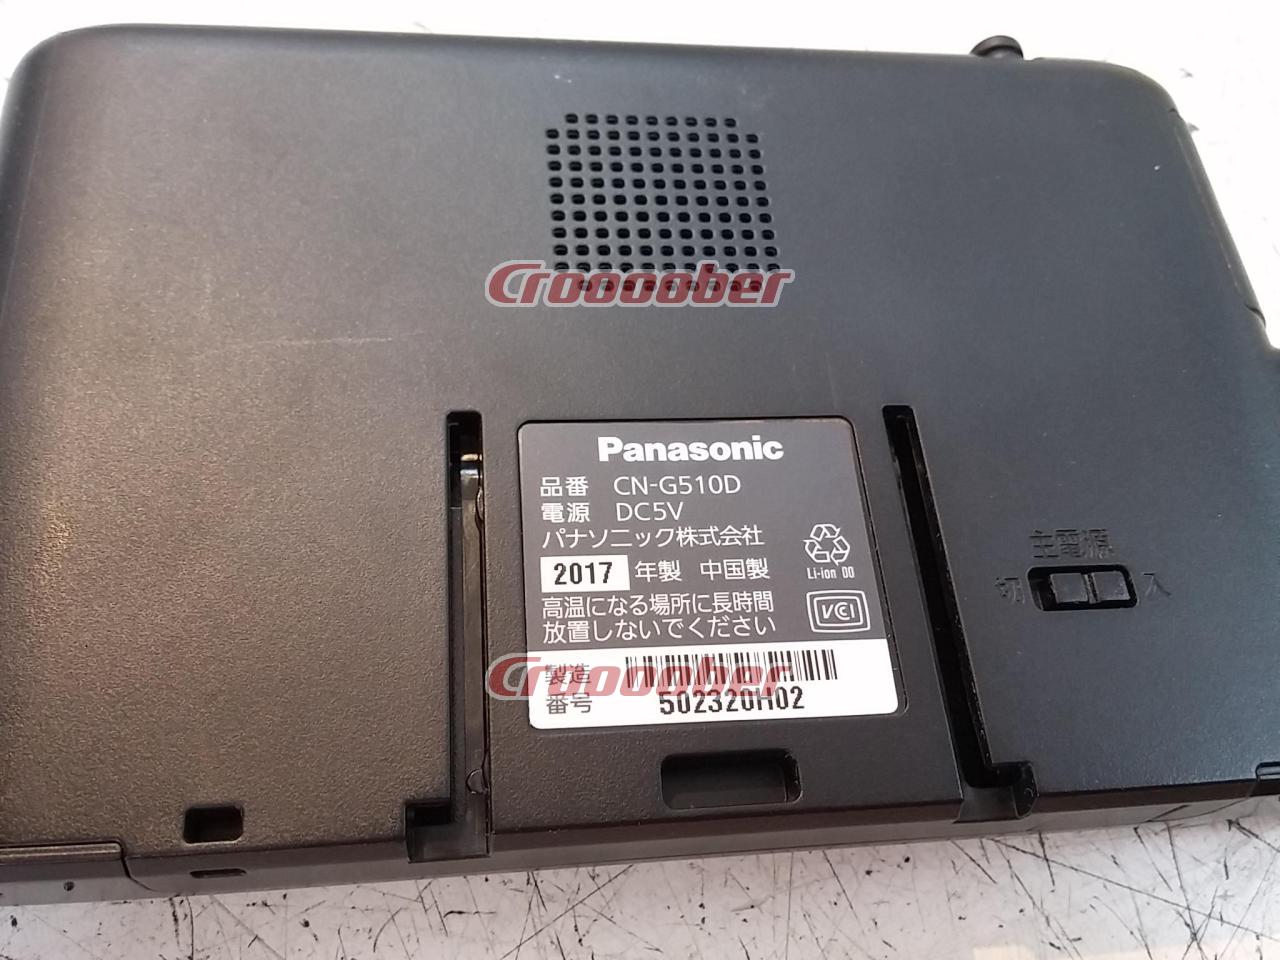 Panasonic CN-G510D Gorilla Navi | Other Accessories | Croooober